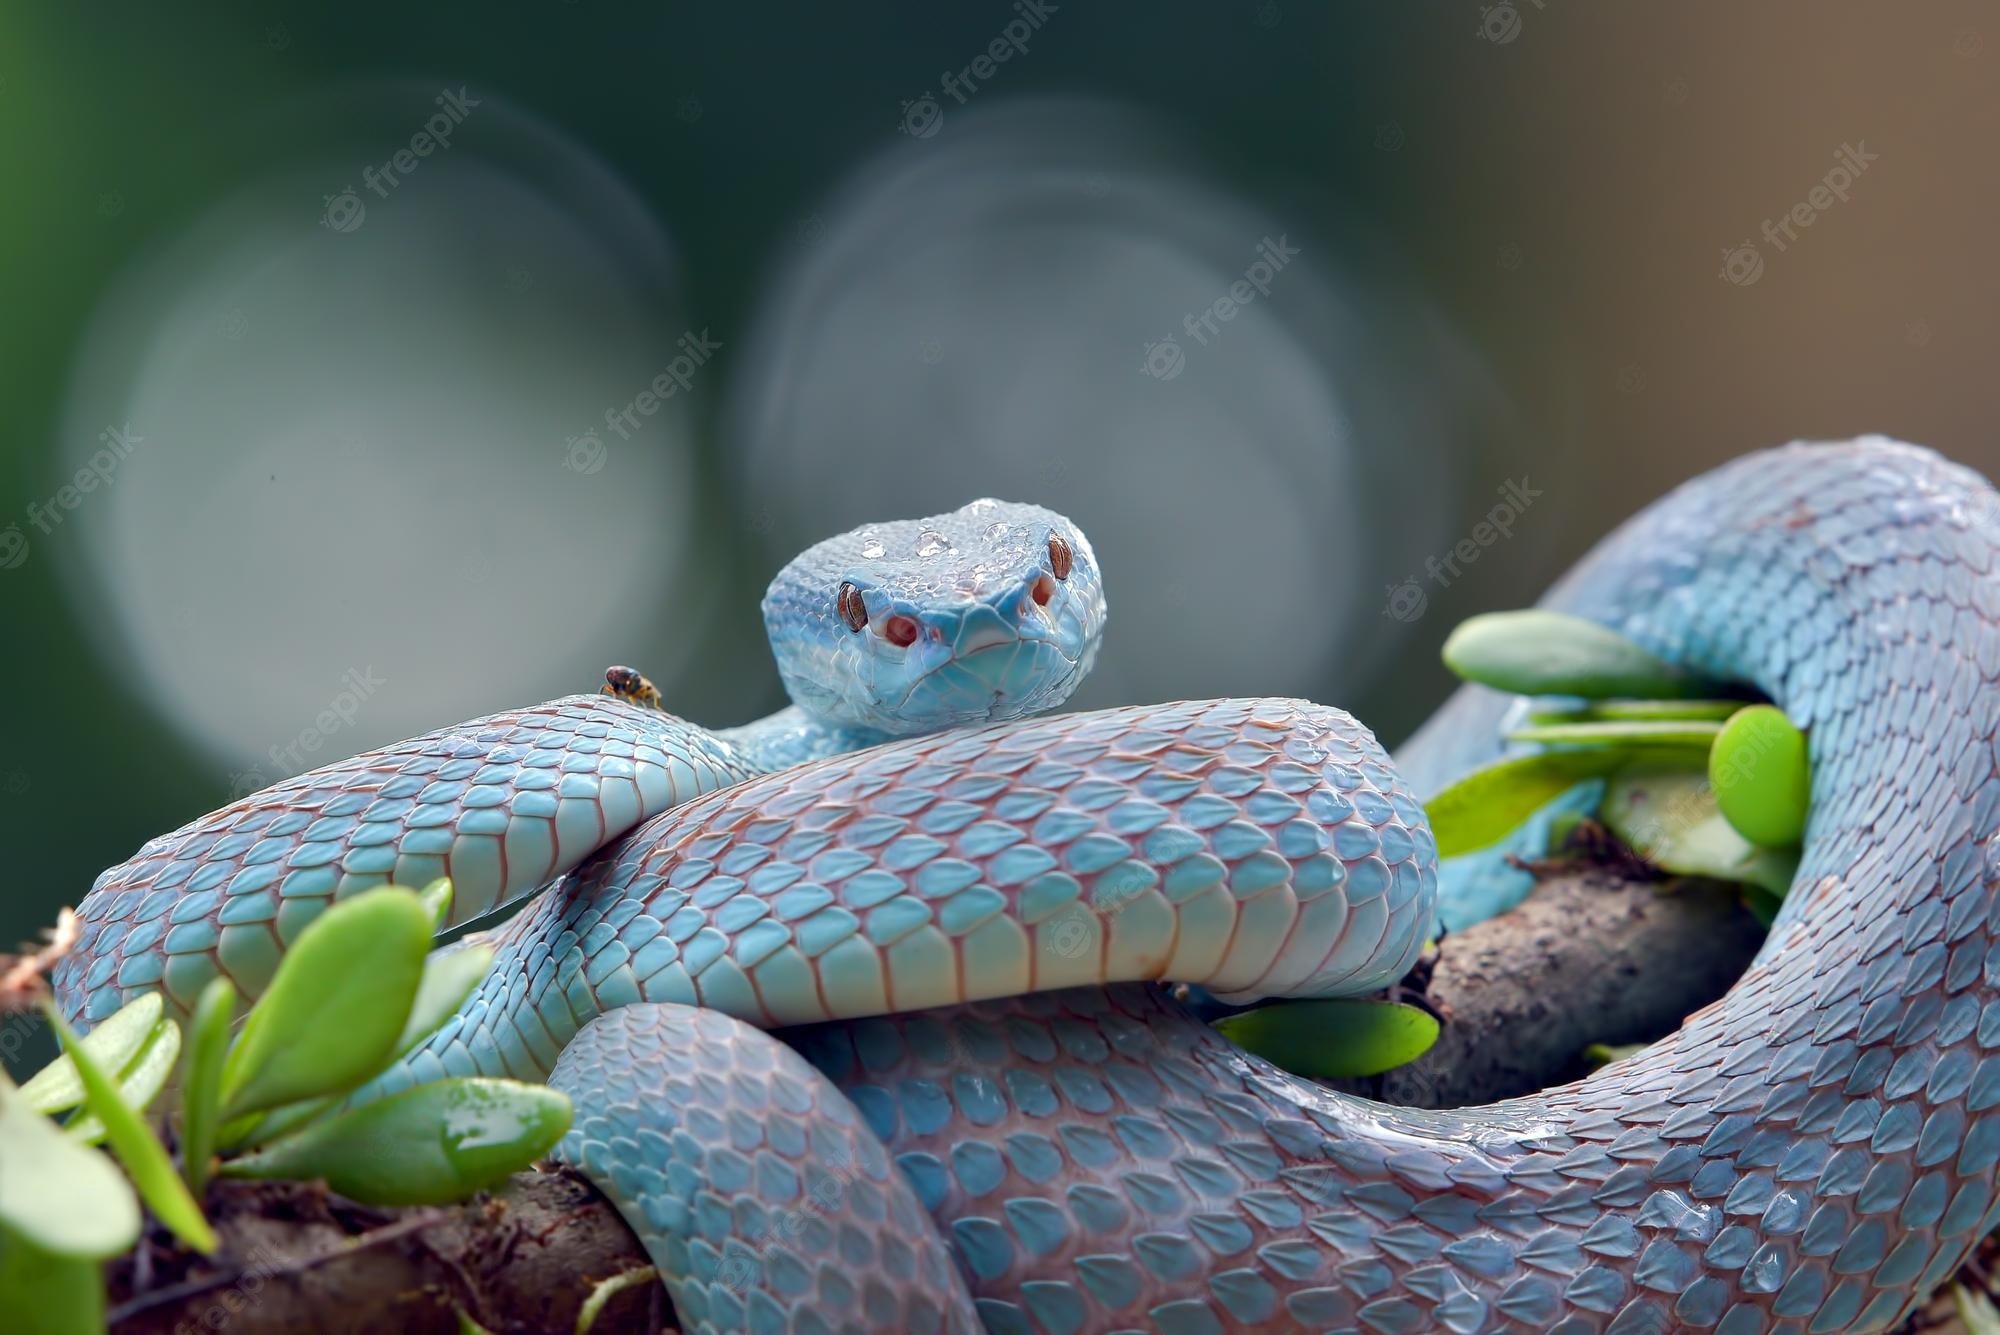 Blue Snake Skin Image. Free Vectors, & PSD